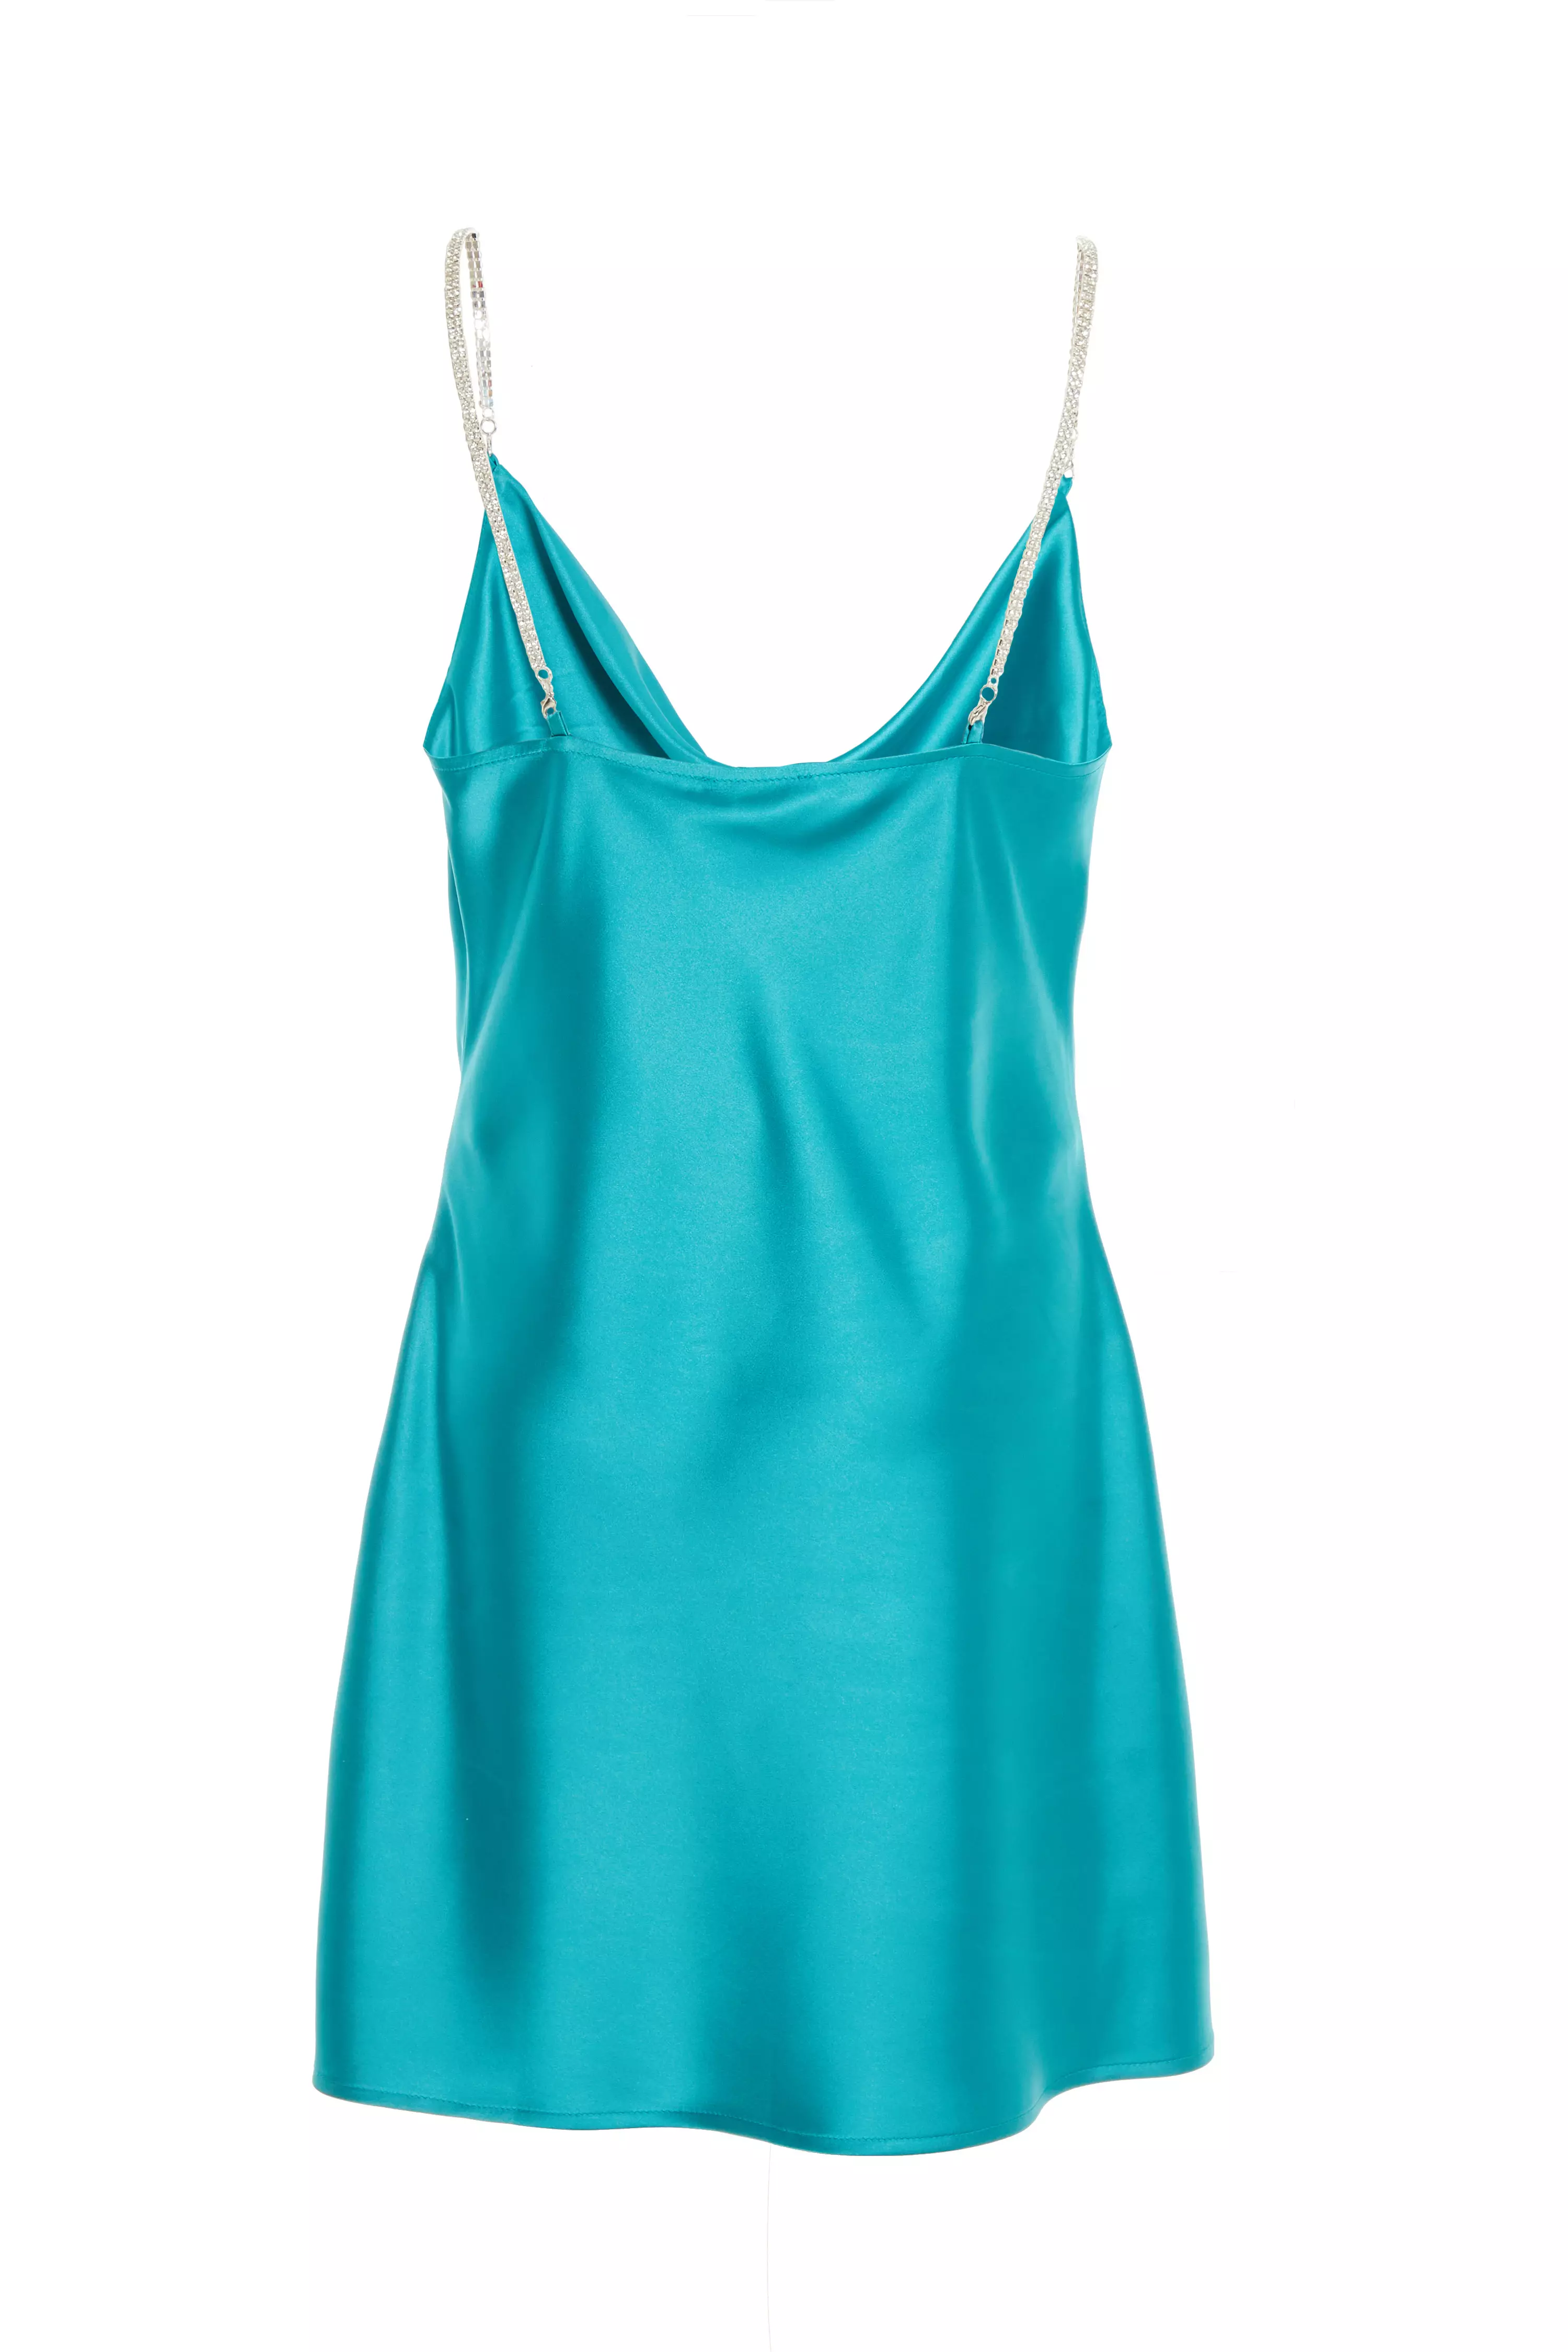 Aqua Blue Diamante Satin Mini Dress